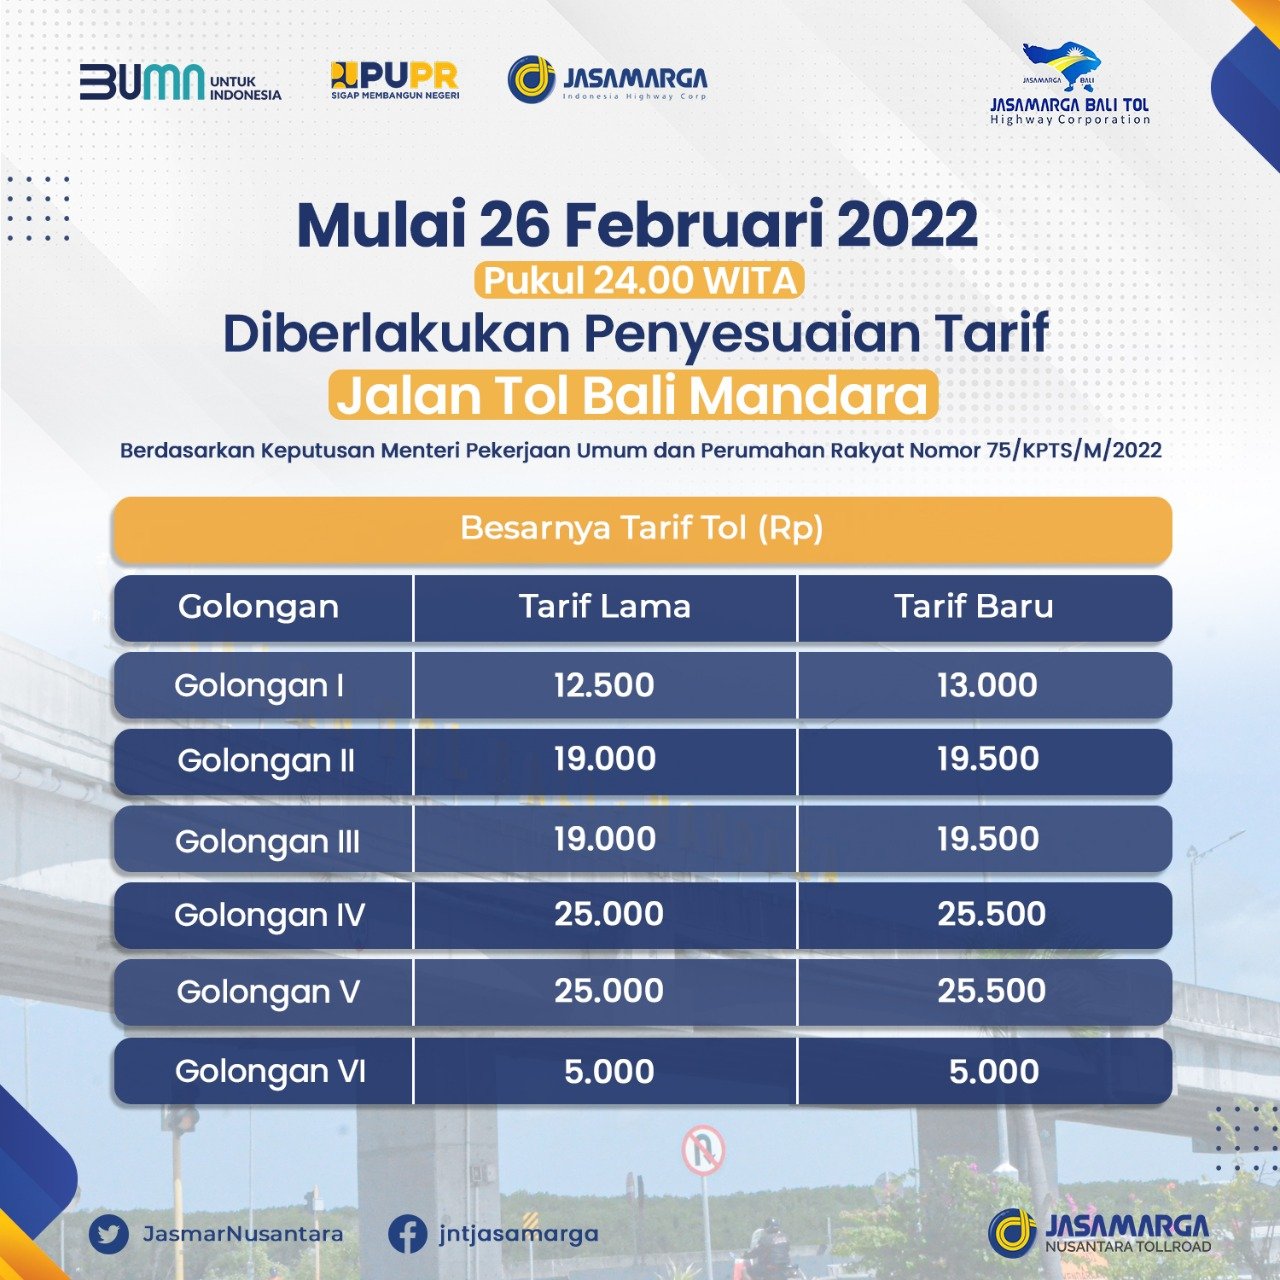 Mulai 26 Februari 2022 Pukul 24.00 WITA Tarif Jalan Tol Bali Mandara Disesuaikan